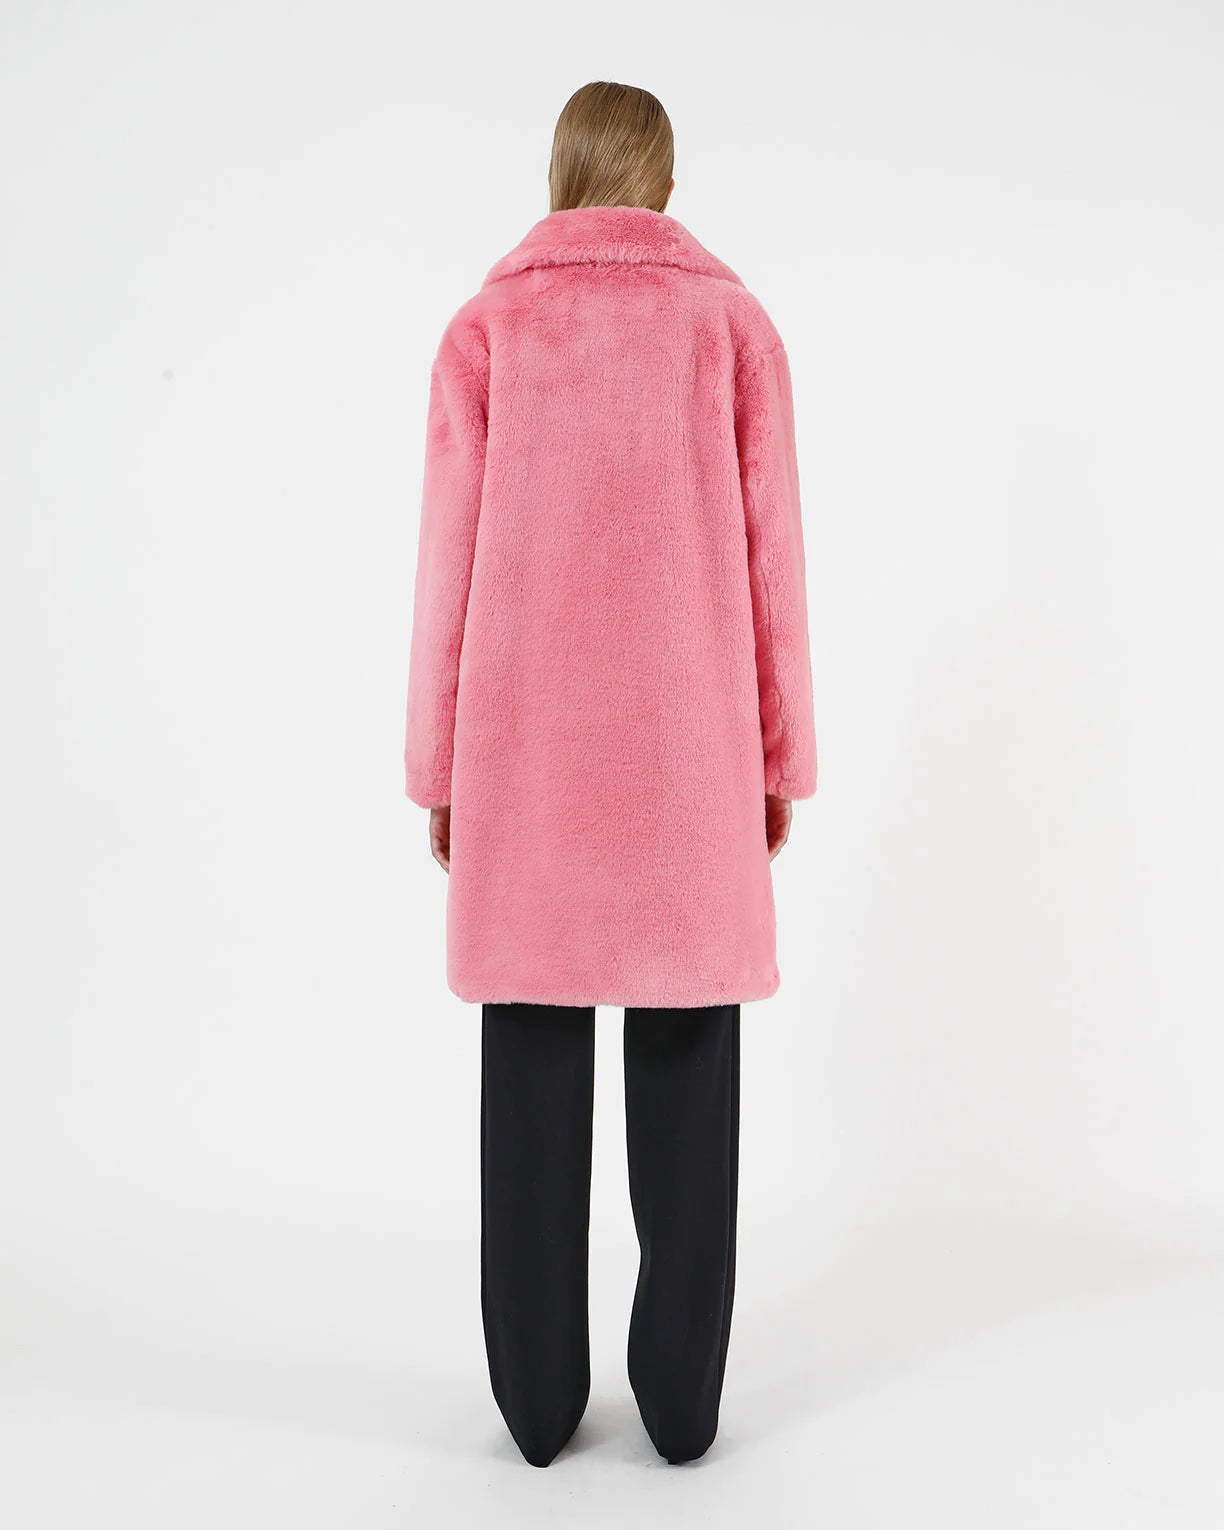 Apparis Stella Plant-Based Fur Coat in Lolly Pink